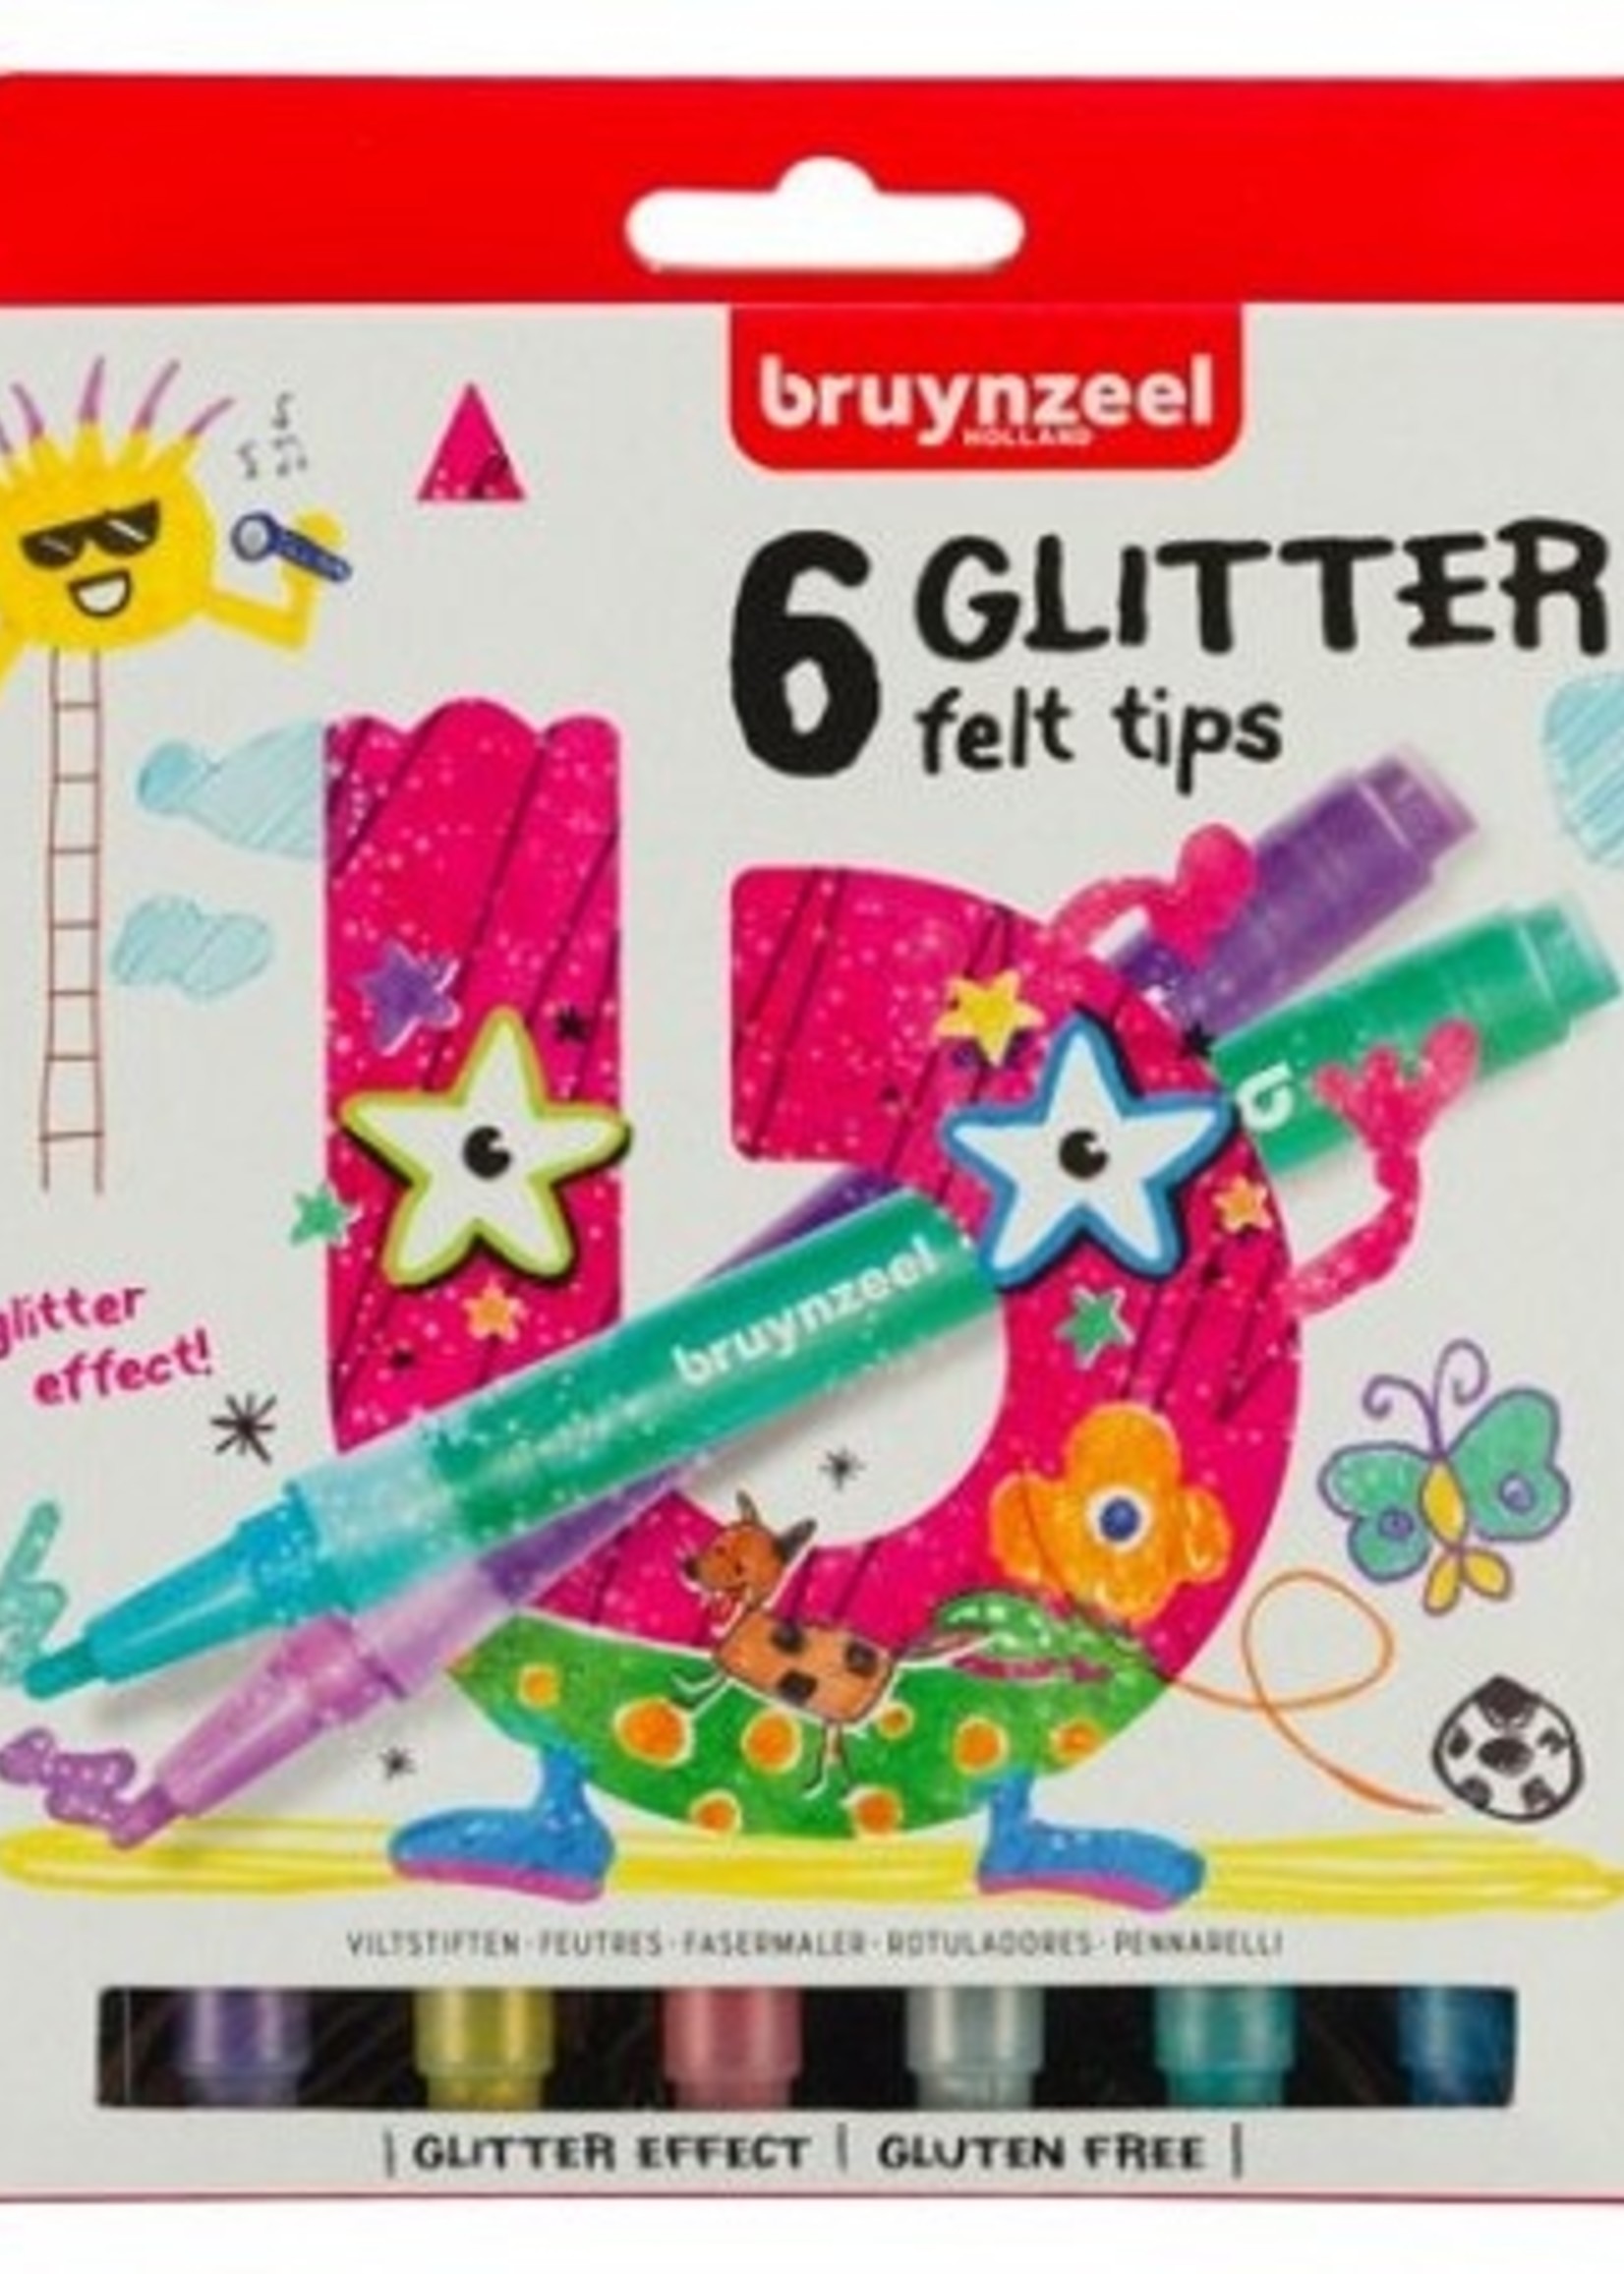 Bruynzeel 6 Glitter Felt Tips